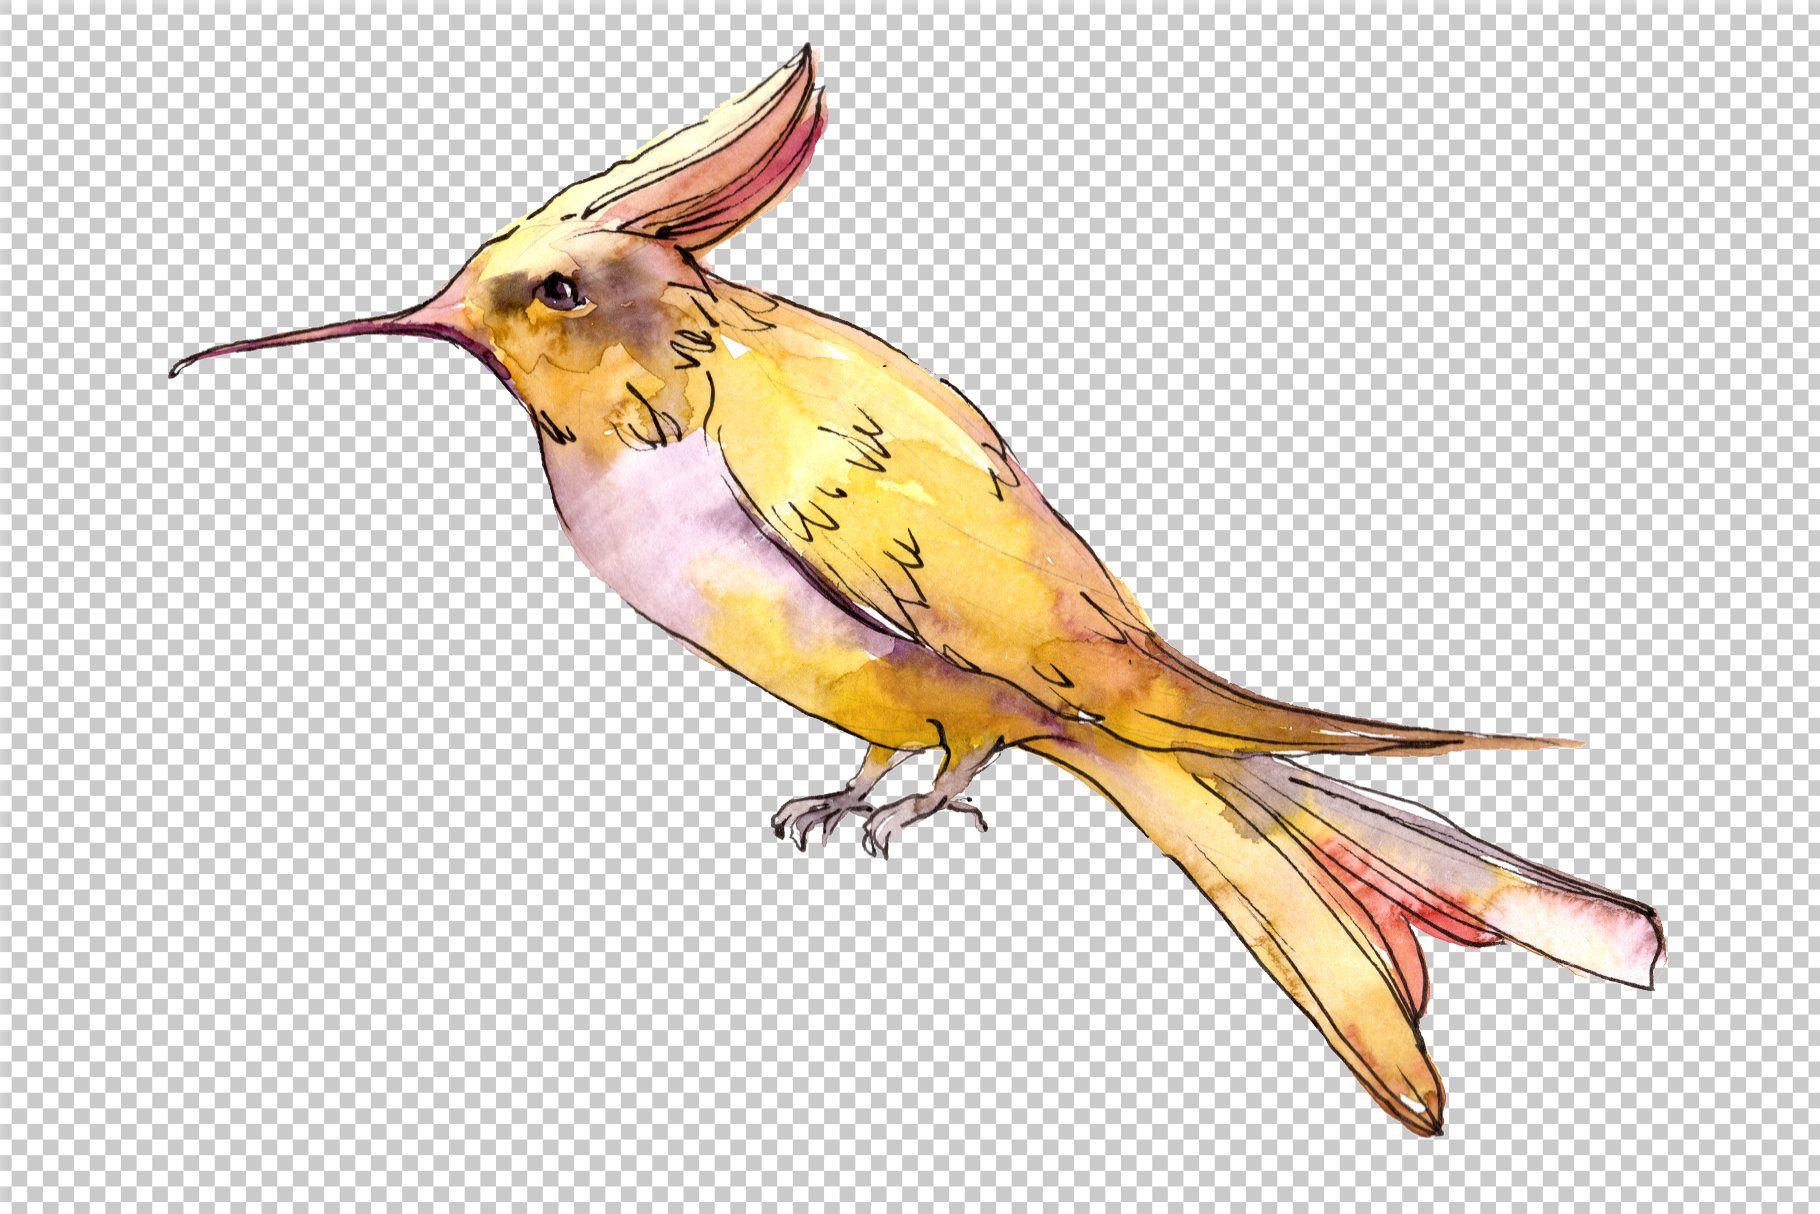 Tropical colibri birds PNG set preview image.